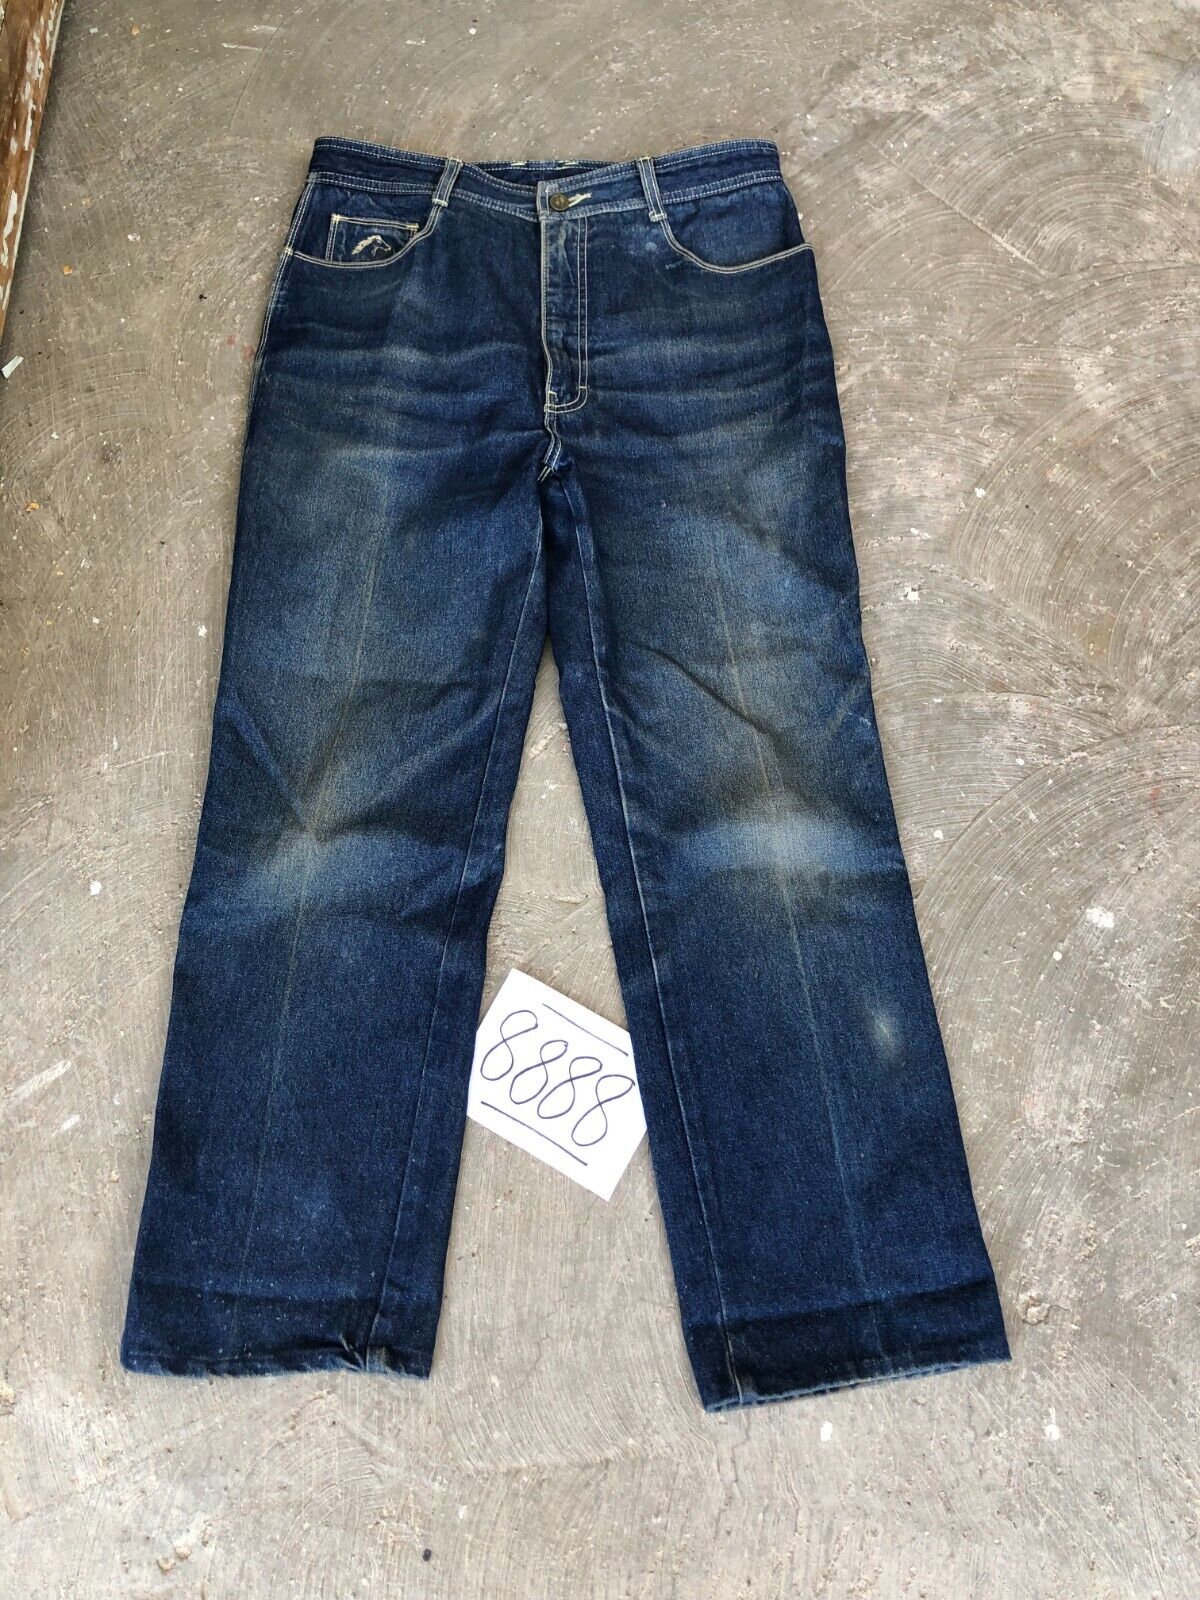 Vintage Mens 70s 80s Jordache Relaxed Jeans Size 34 o… - Gem